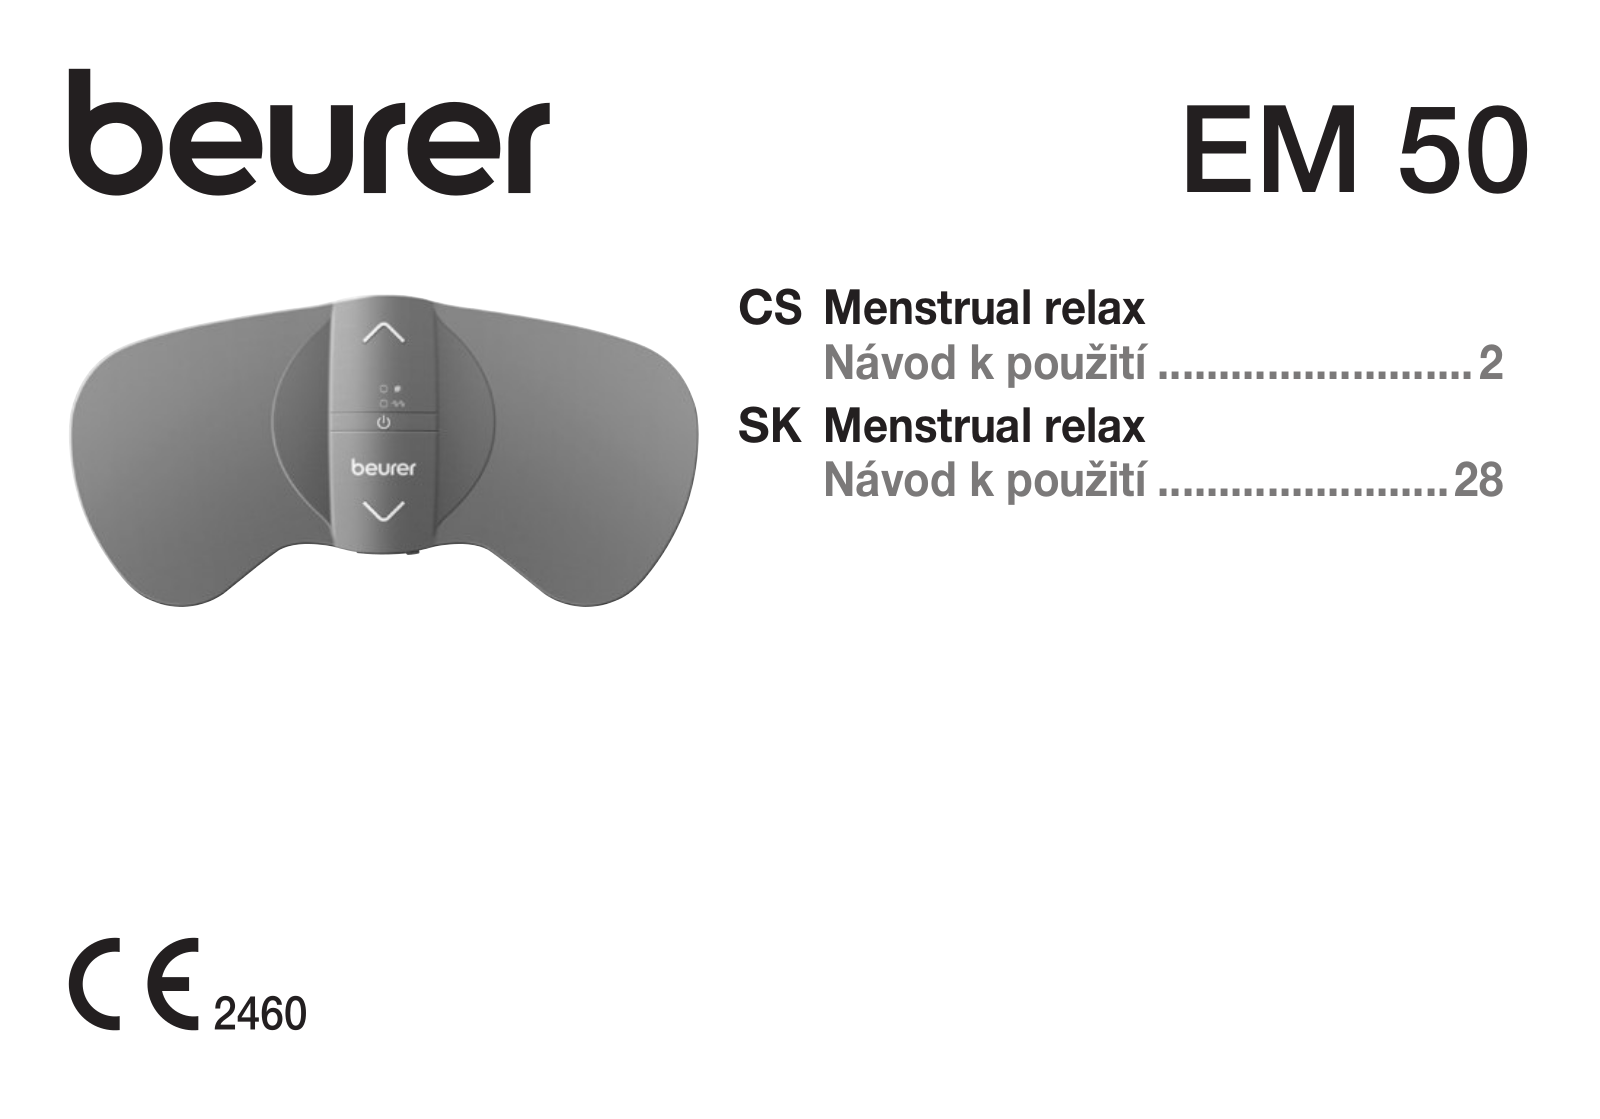 Beurer EM50 User Manual